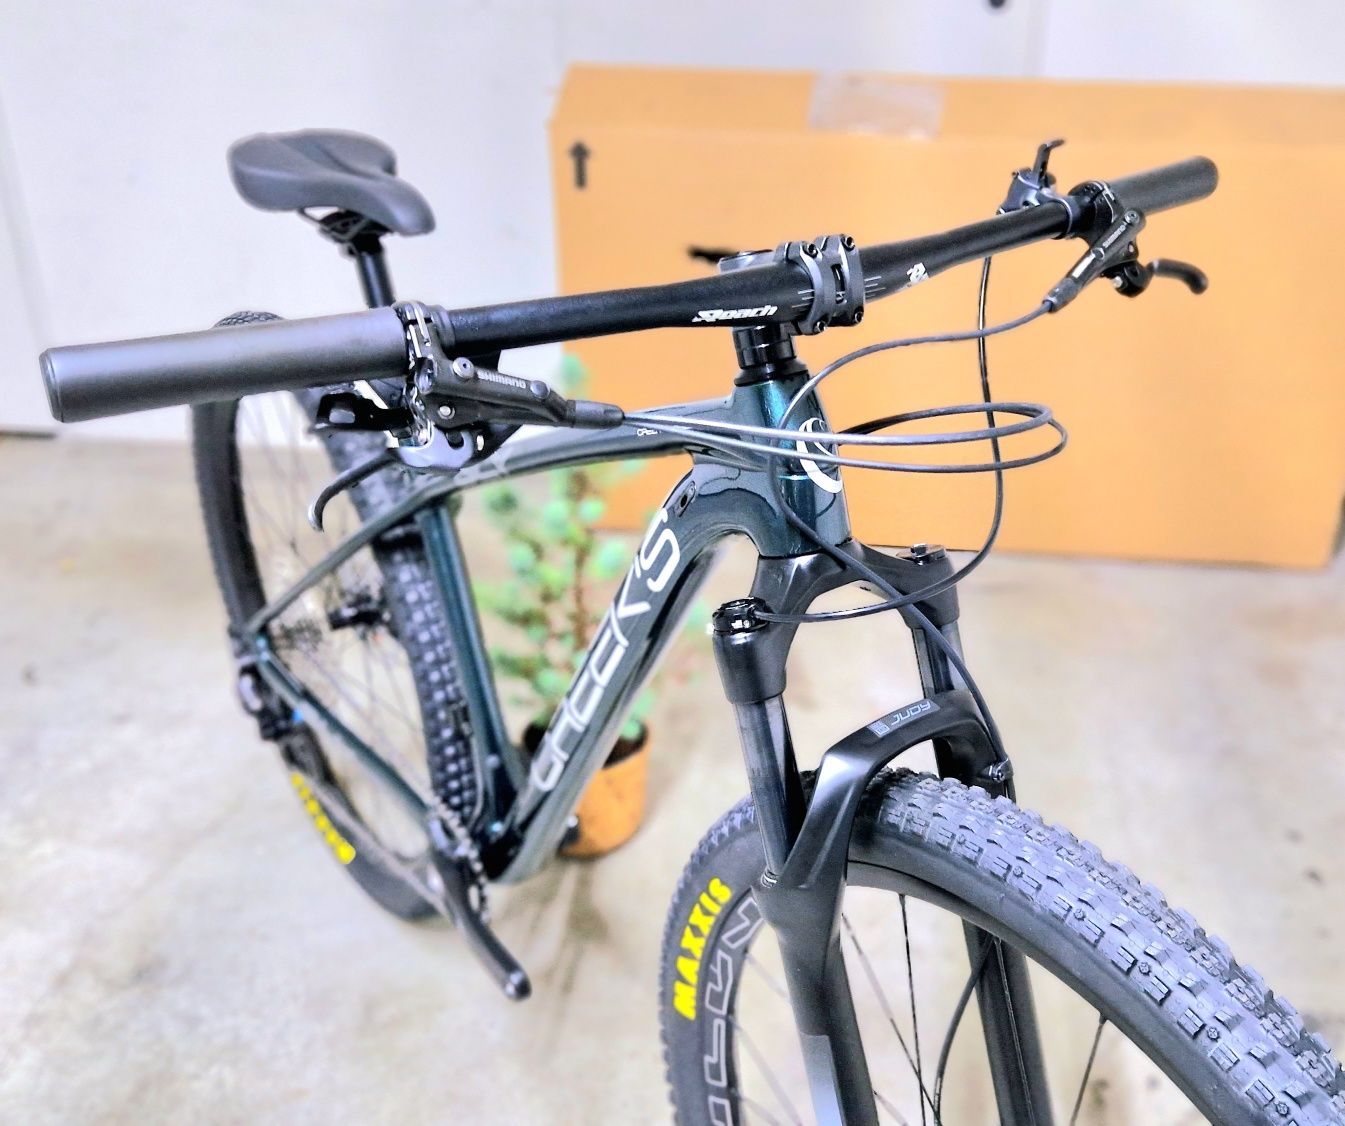 Bicicleta nova - creek's bly carbono (1x12 shimano deore)